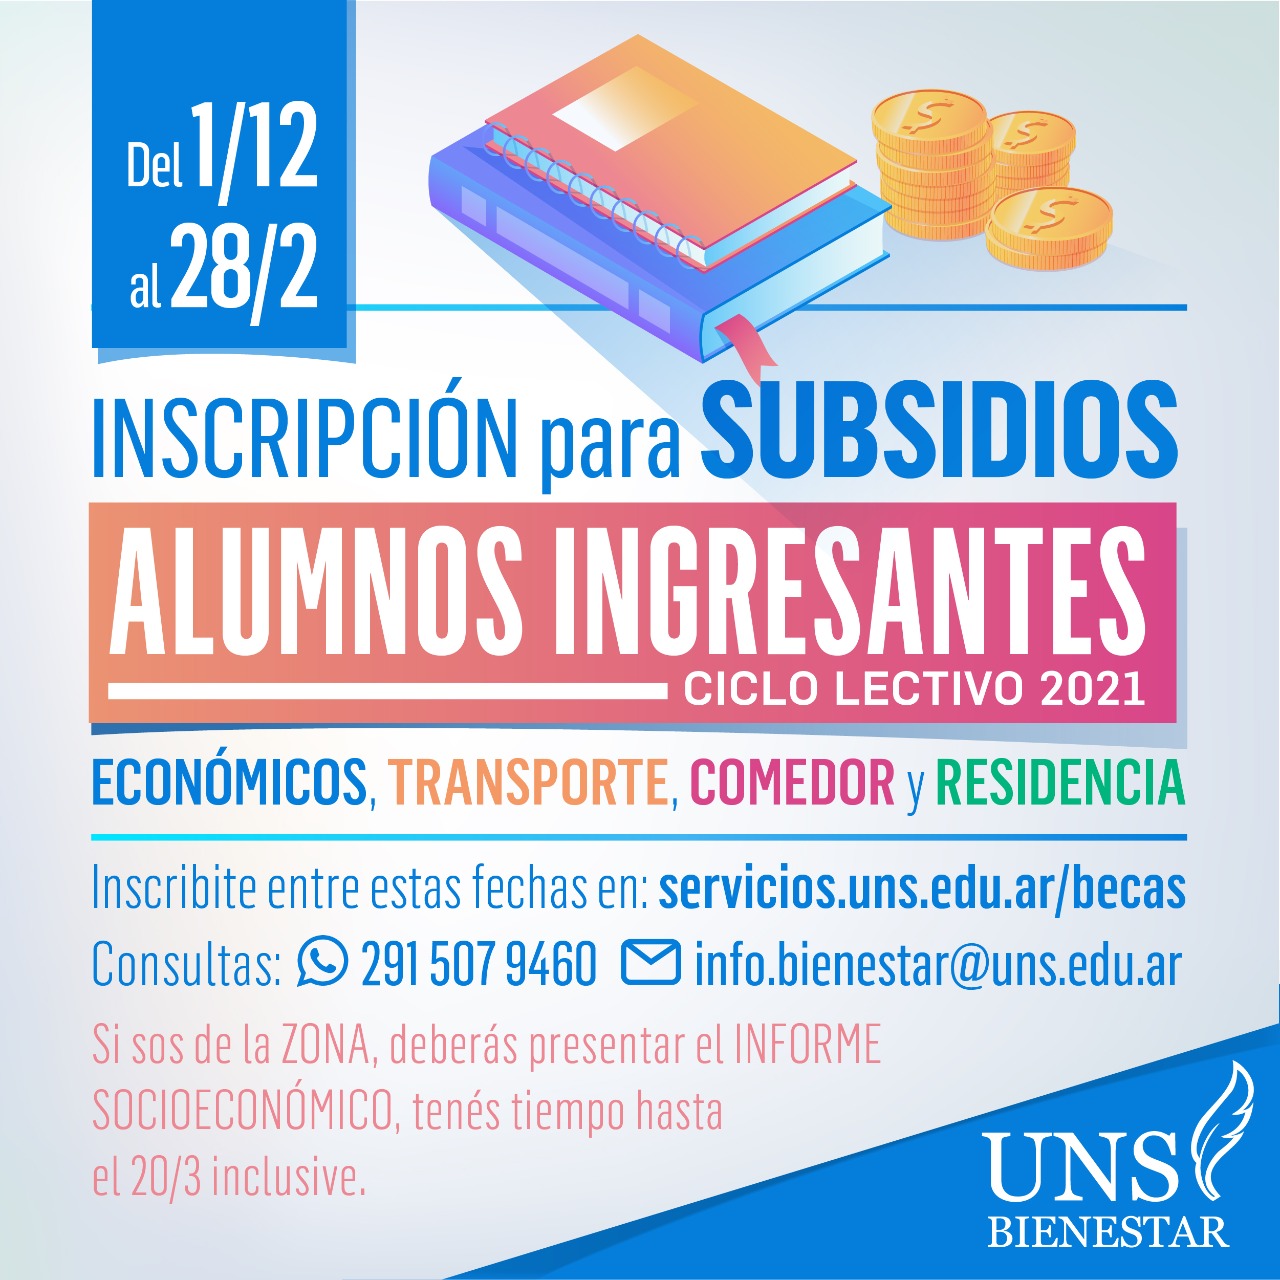 Ciclo Lectivo 2021: Atención: UNS inscripción para subsidios de alumnos ingresantes